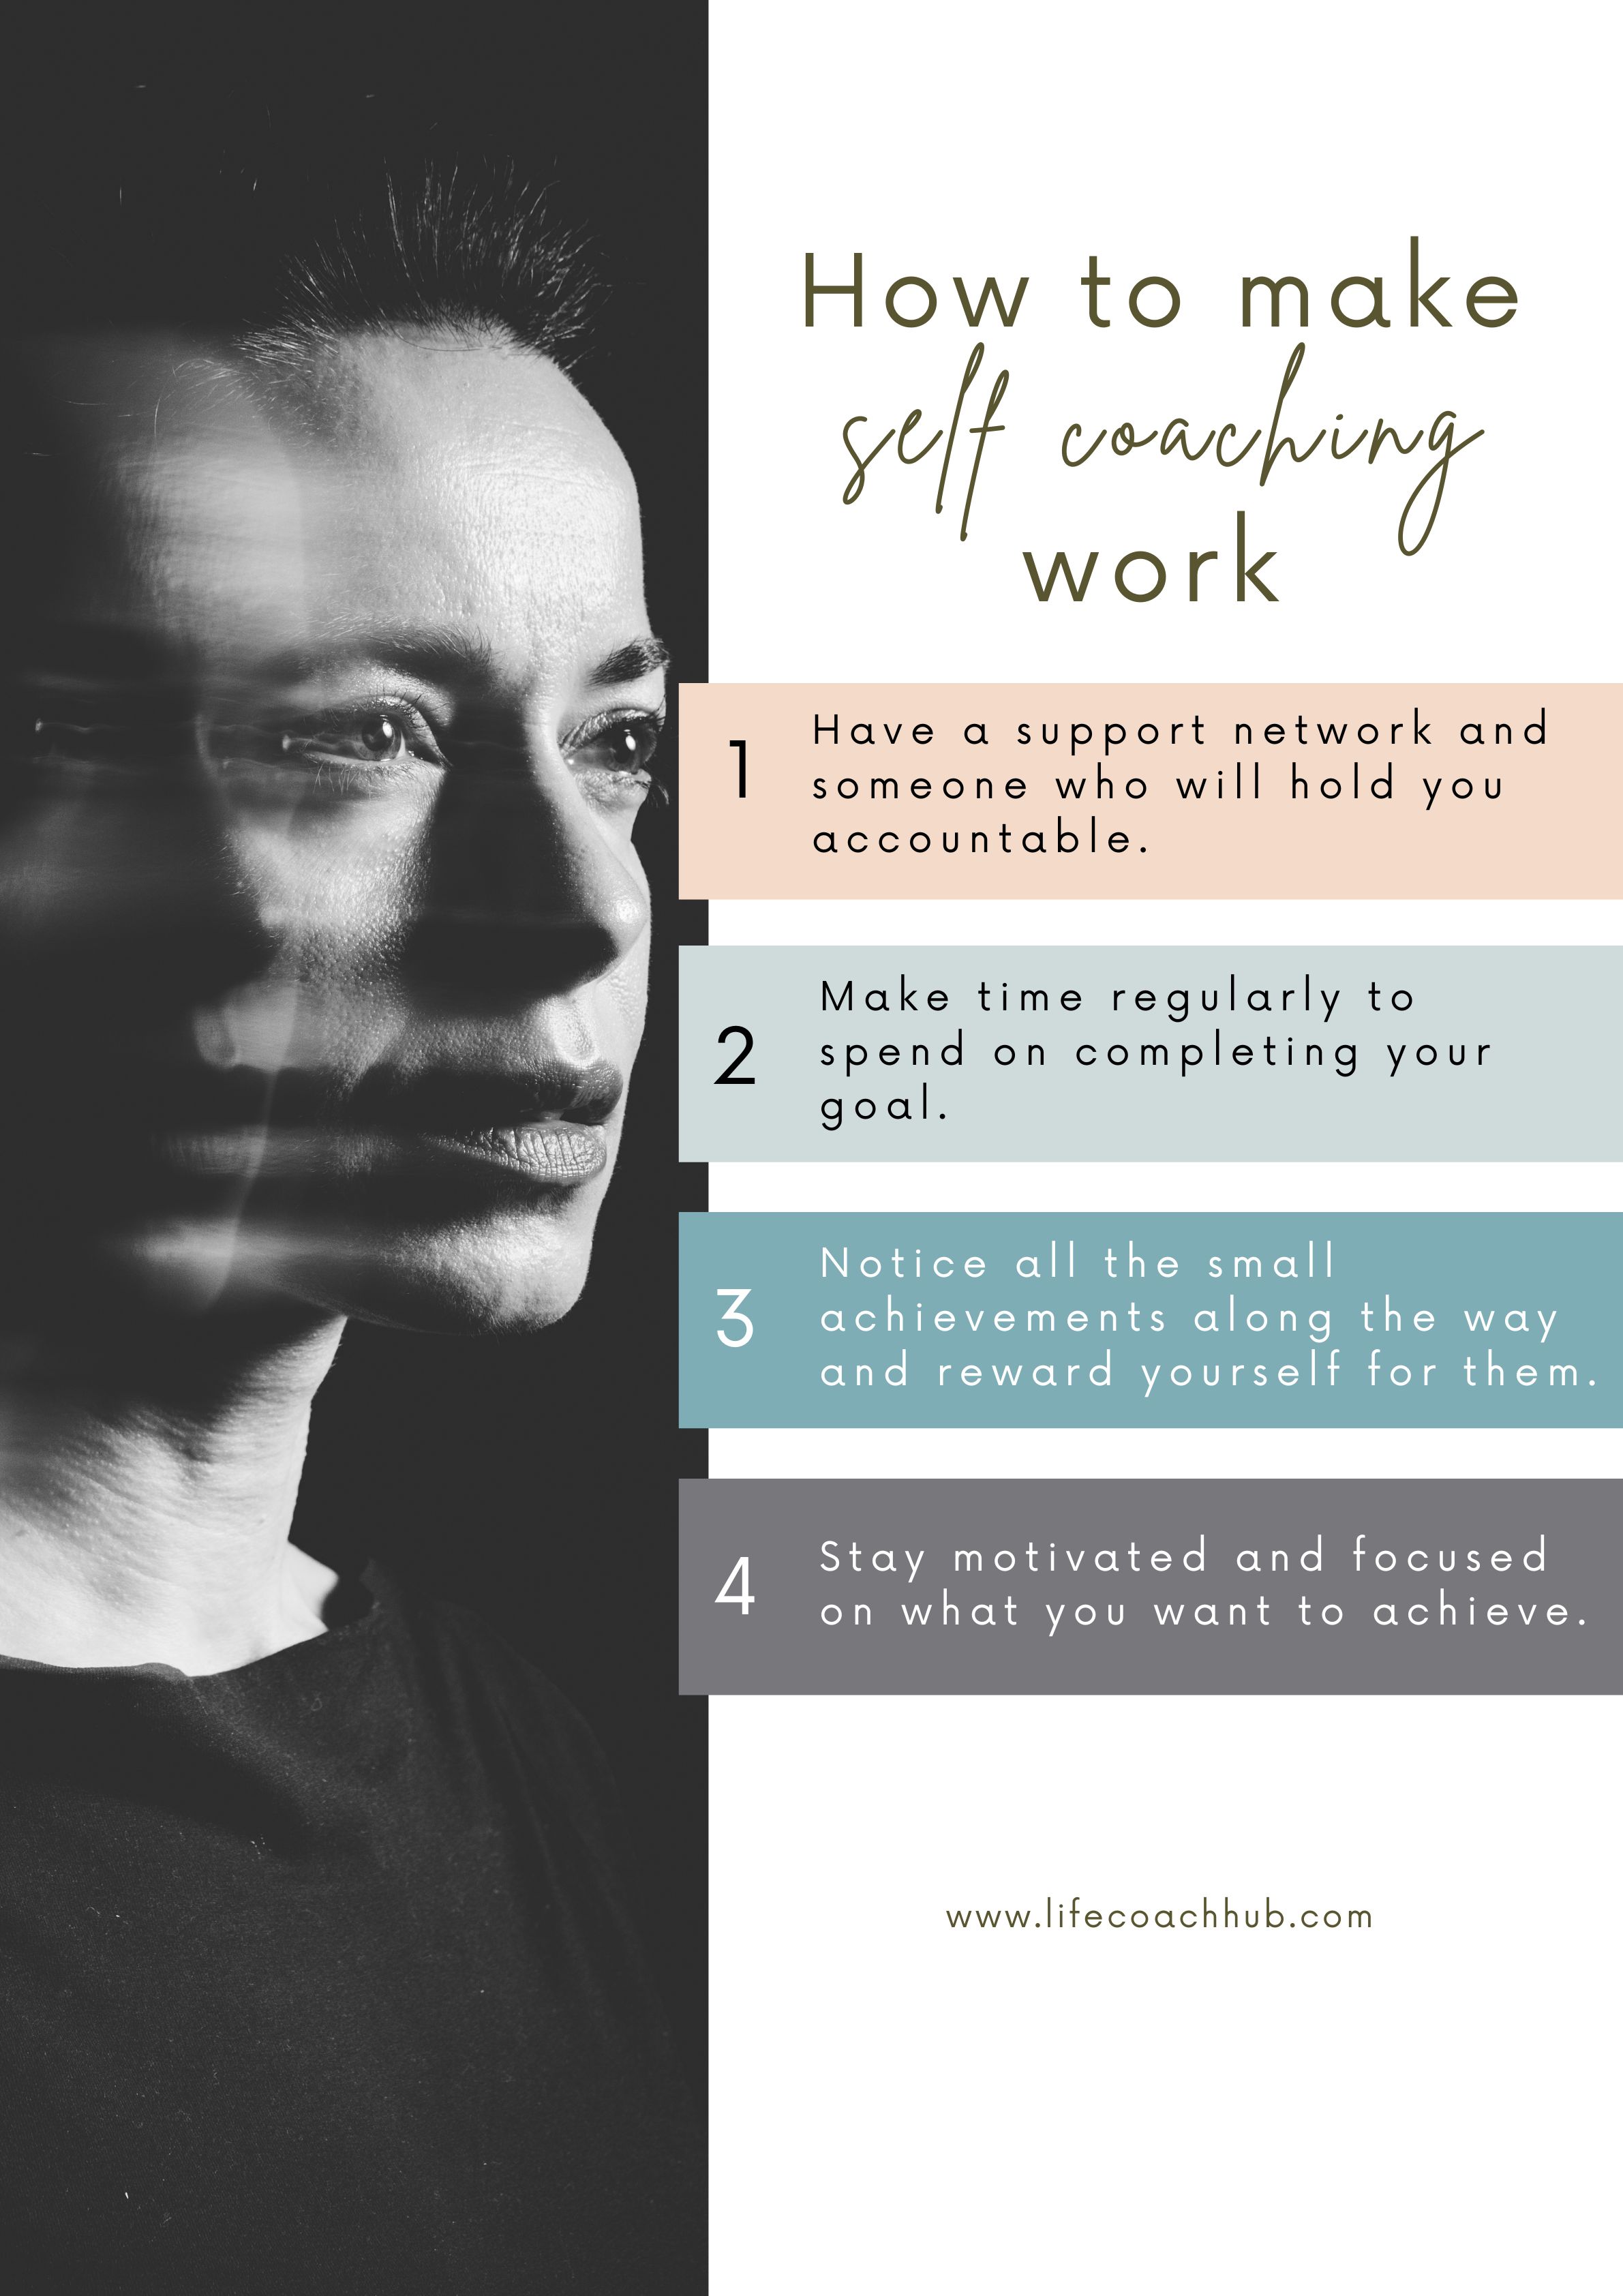 How to make self coaching work